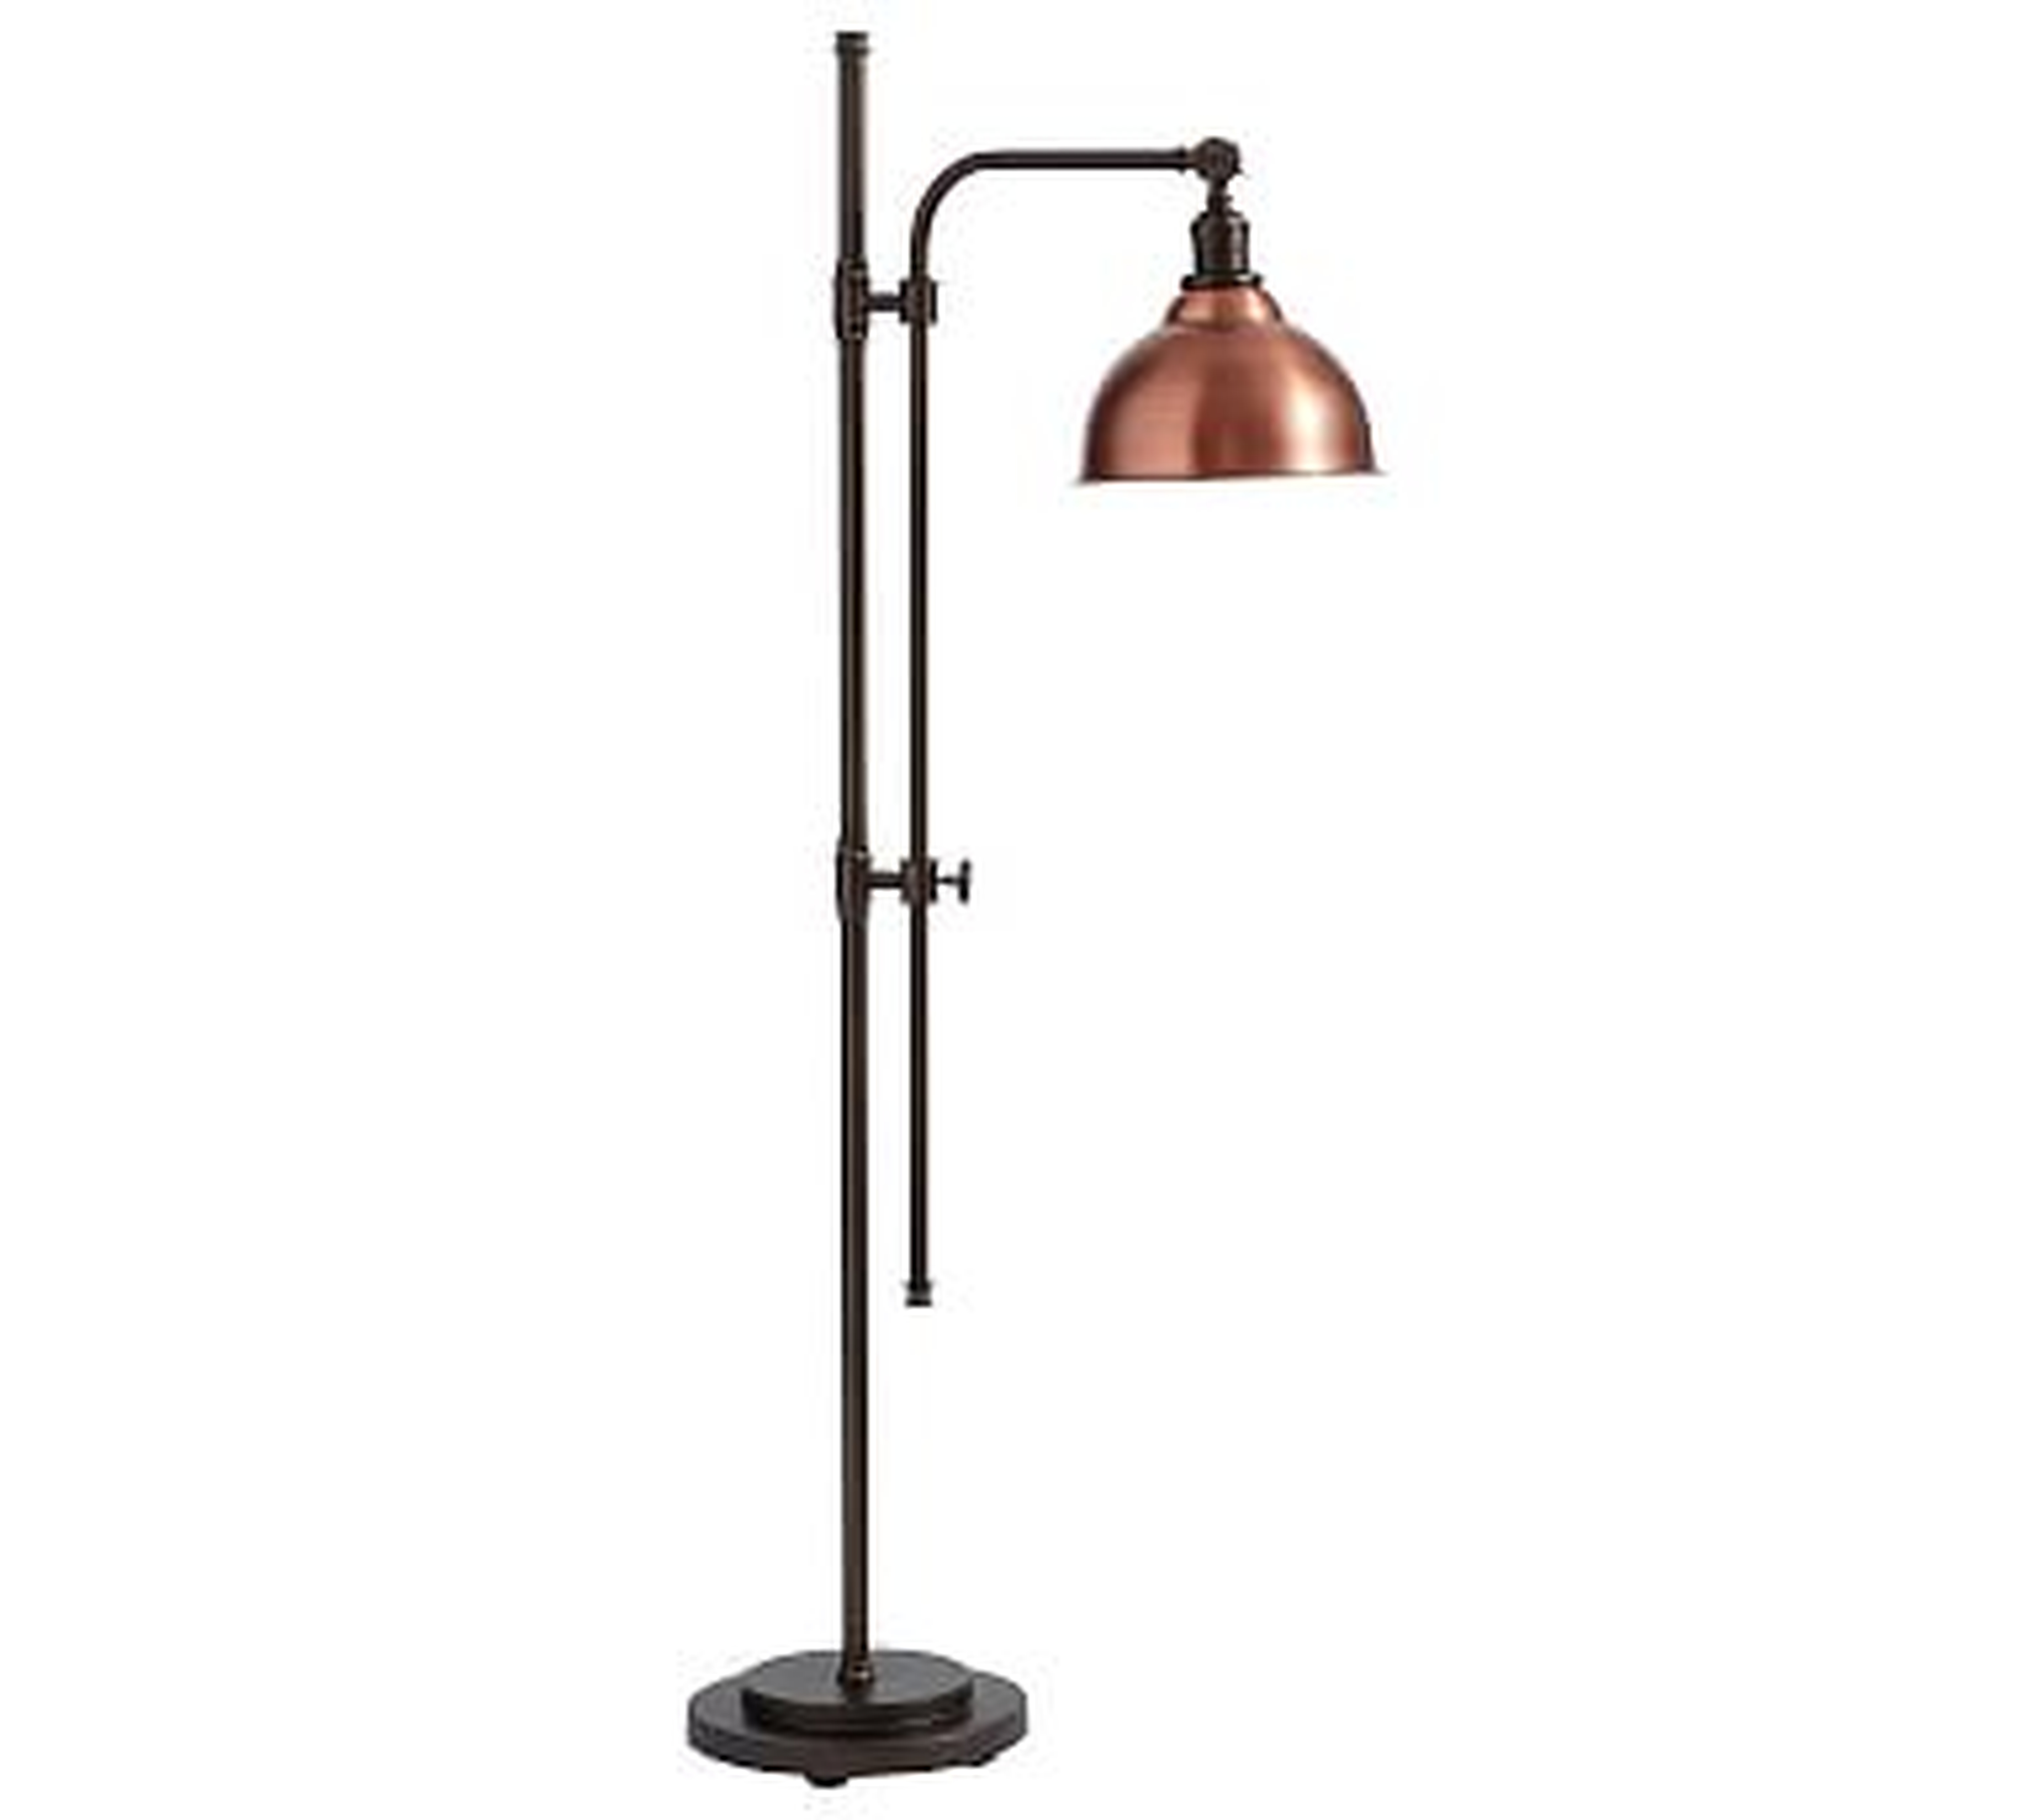 PB Classic High Gloss Copper Metal Bell Articulating Floor Lamp, Bronze Base - Pottery Barn